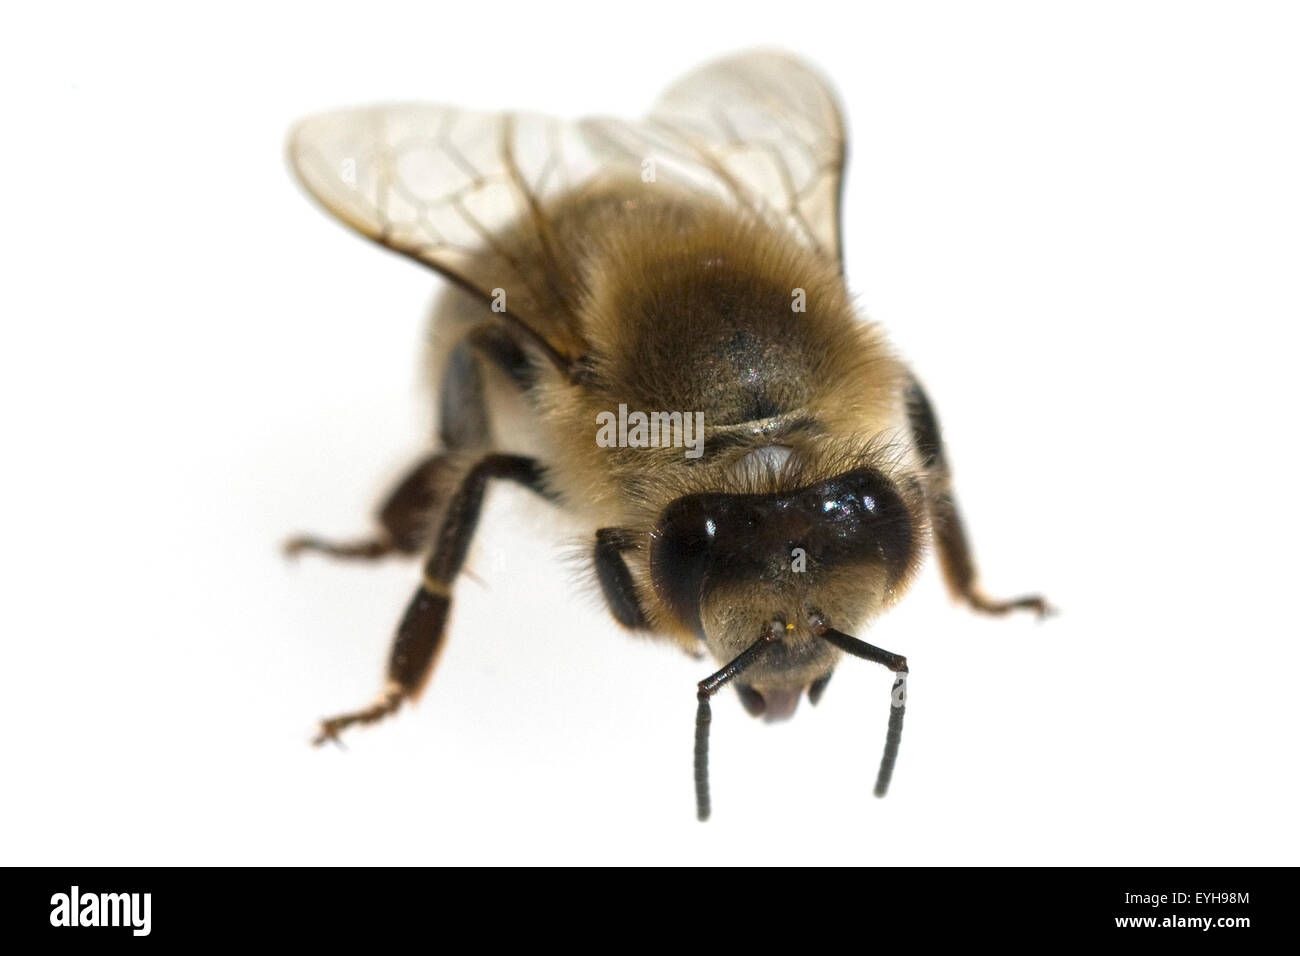 Biene, Apis mellifera; Honigbiene; Insekt Stock Photo